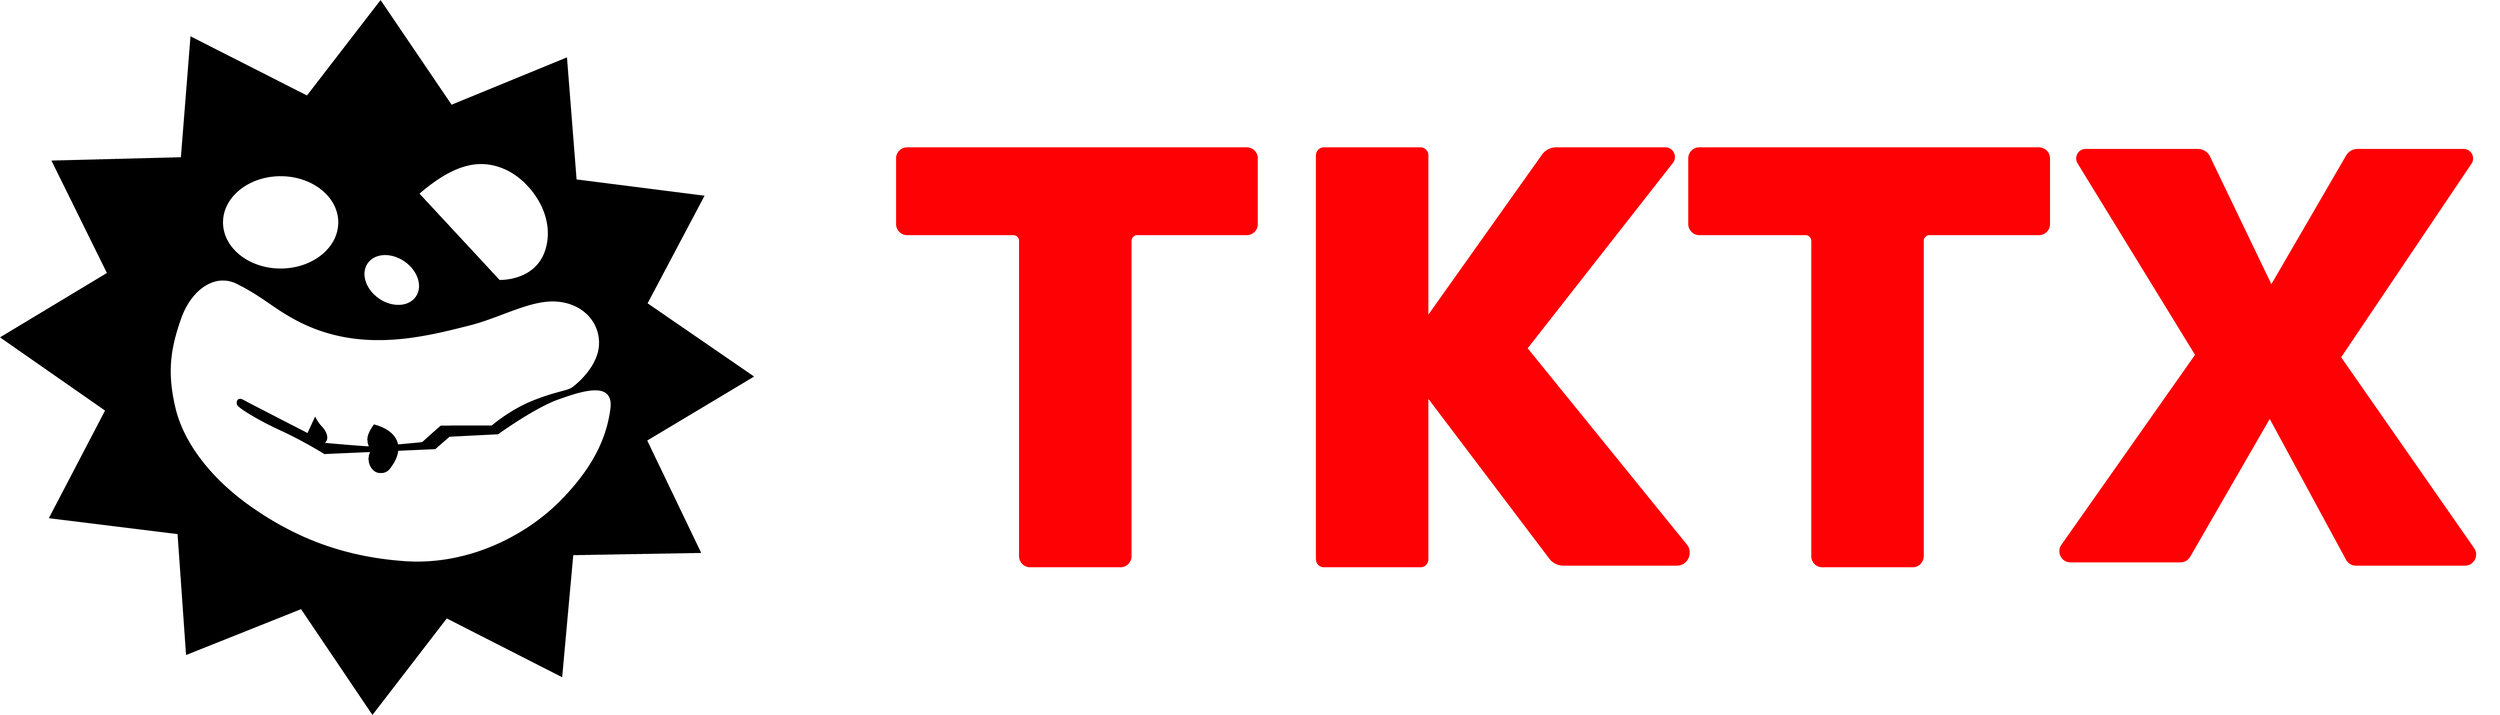 TKTX coupons logo